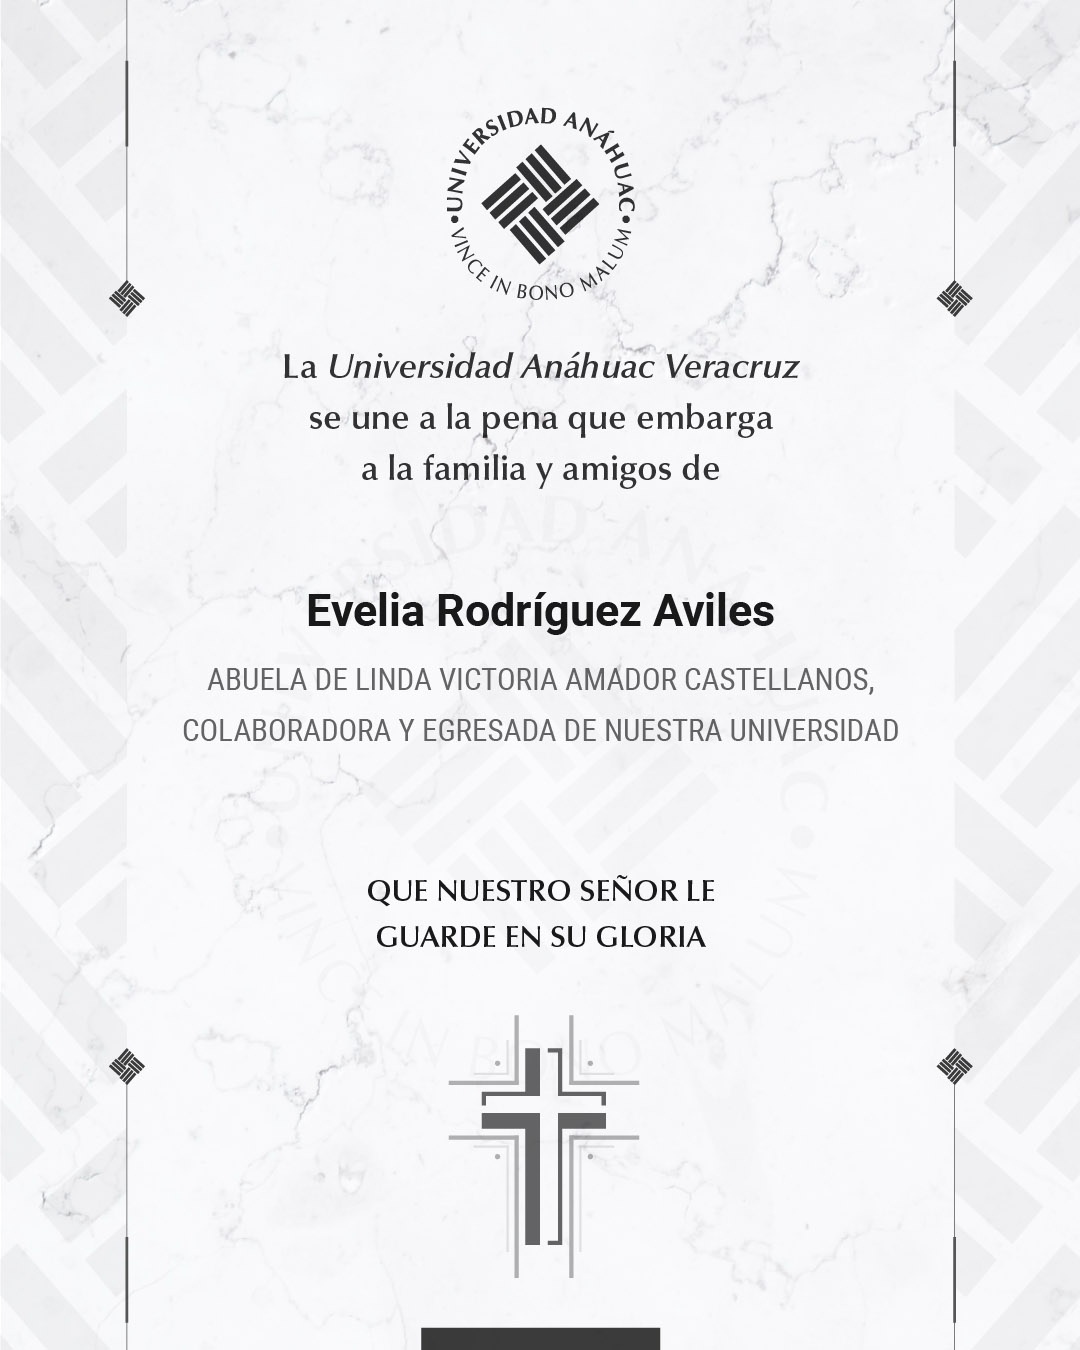 5 / 5 - Sra. Evelia Rodríguez Aviles